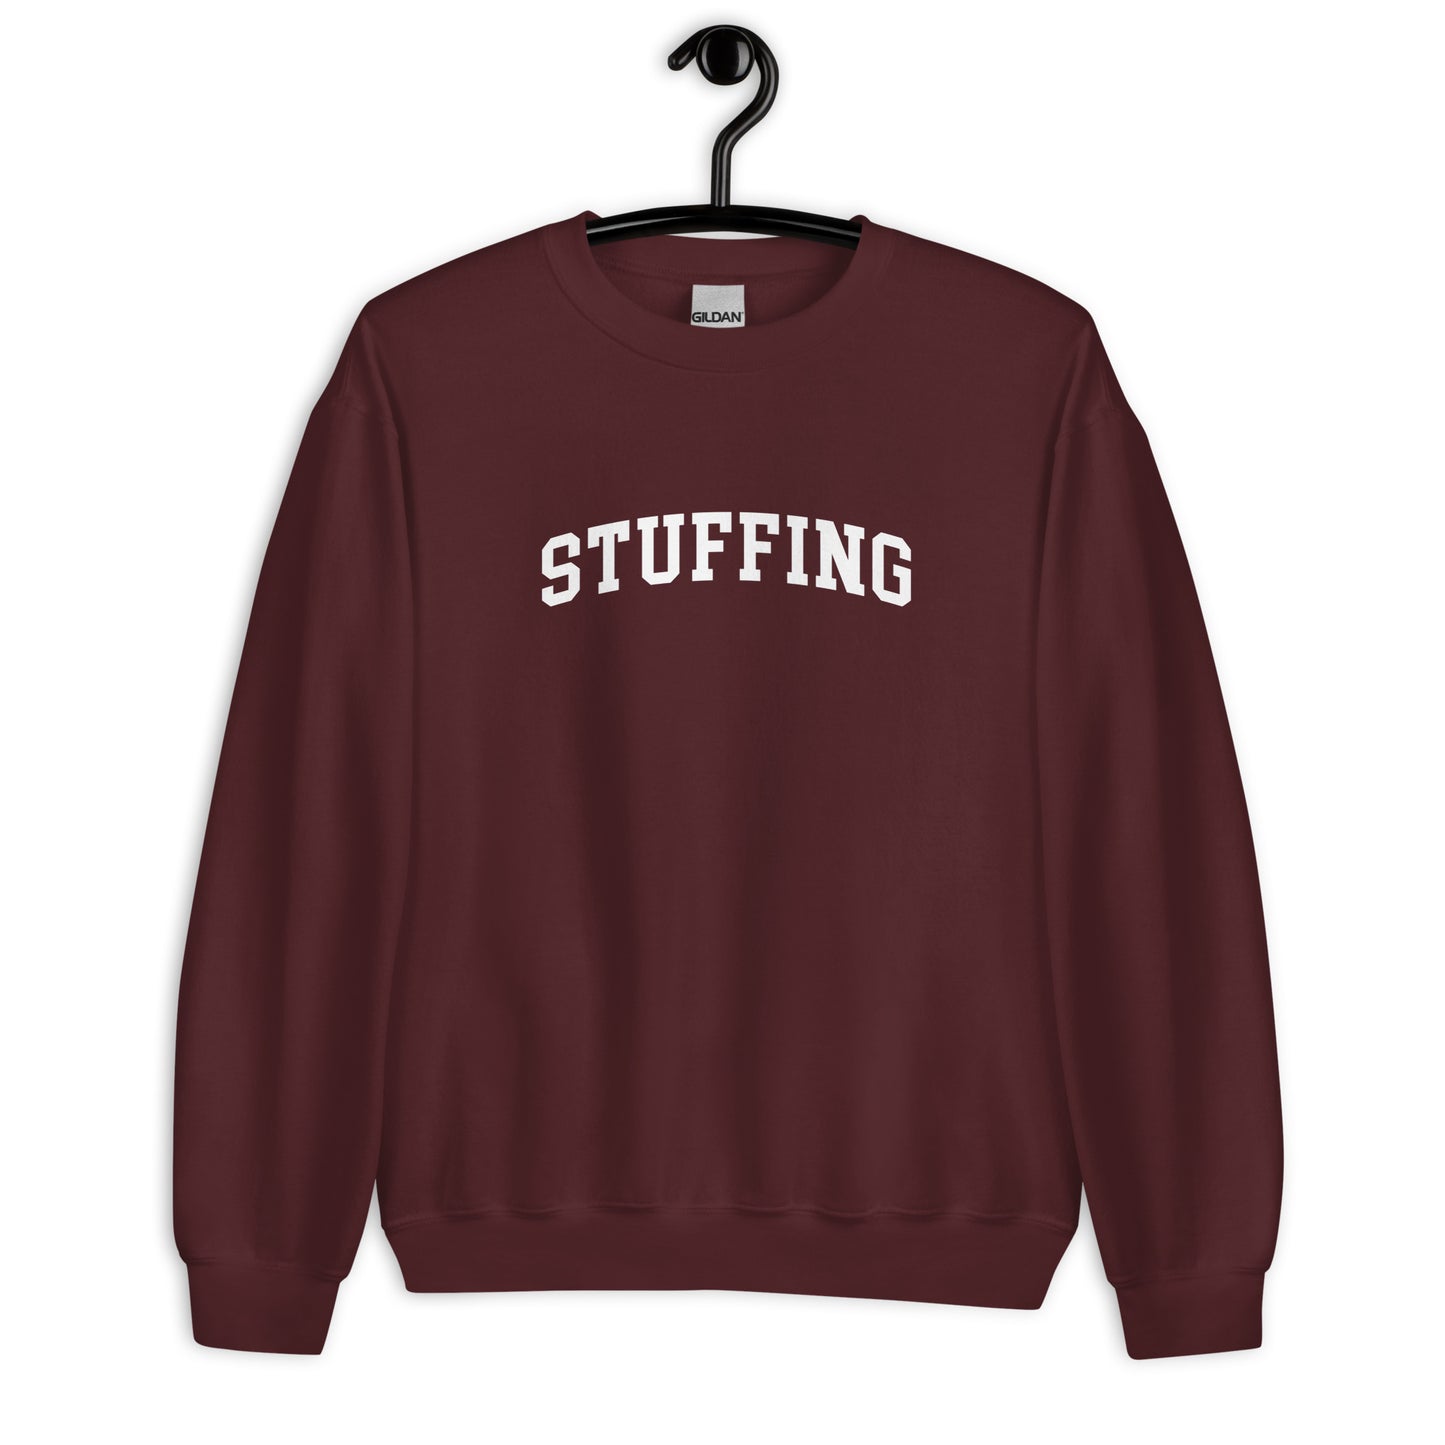 Stuffing Sweatshirt - Arched Font